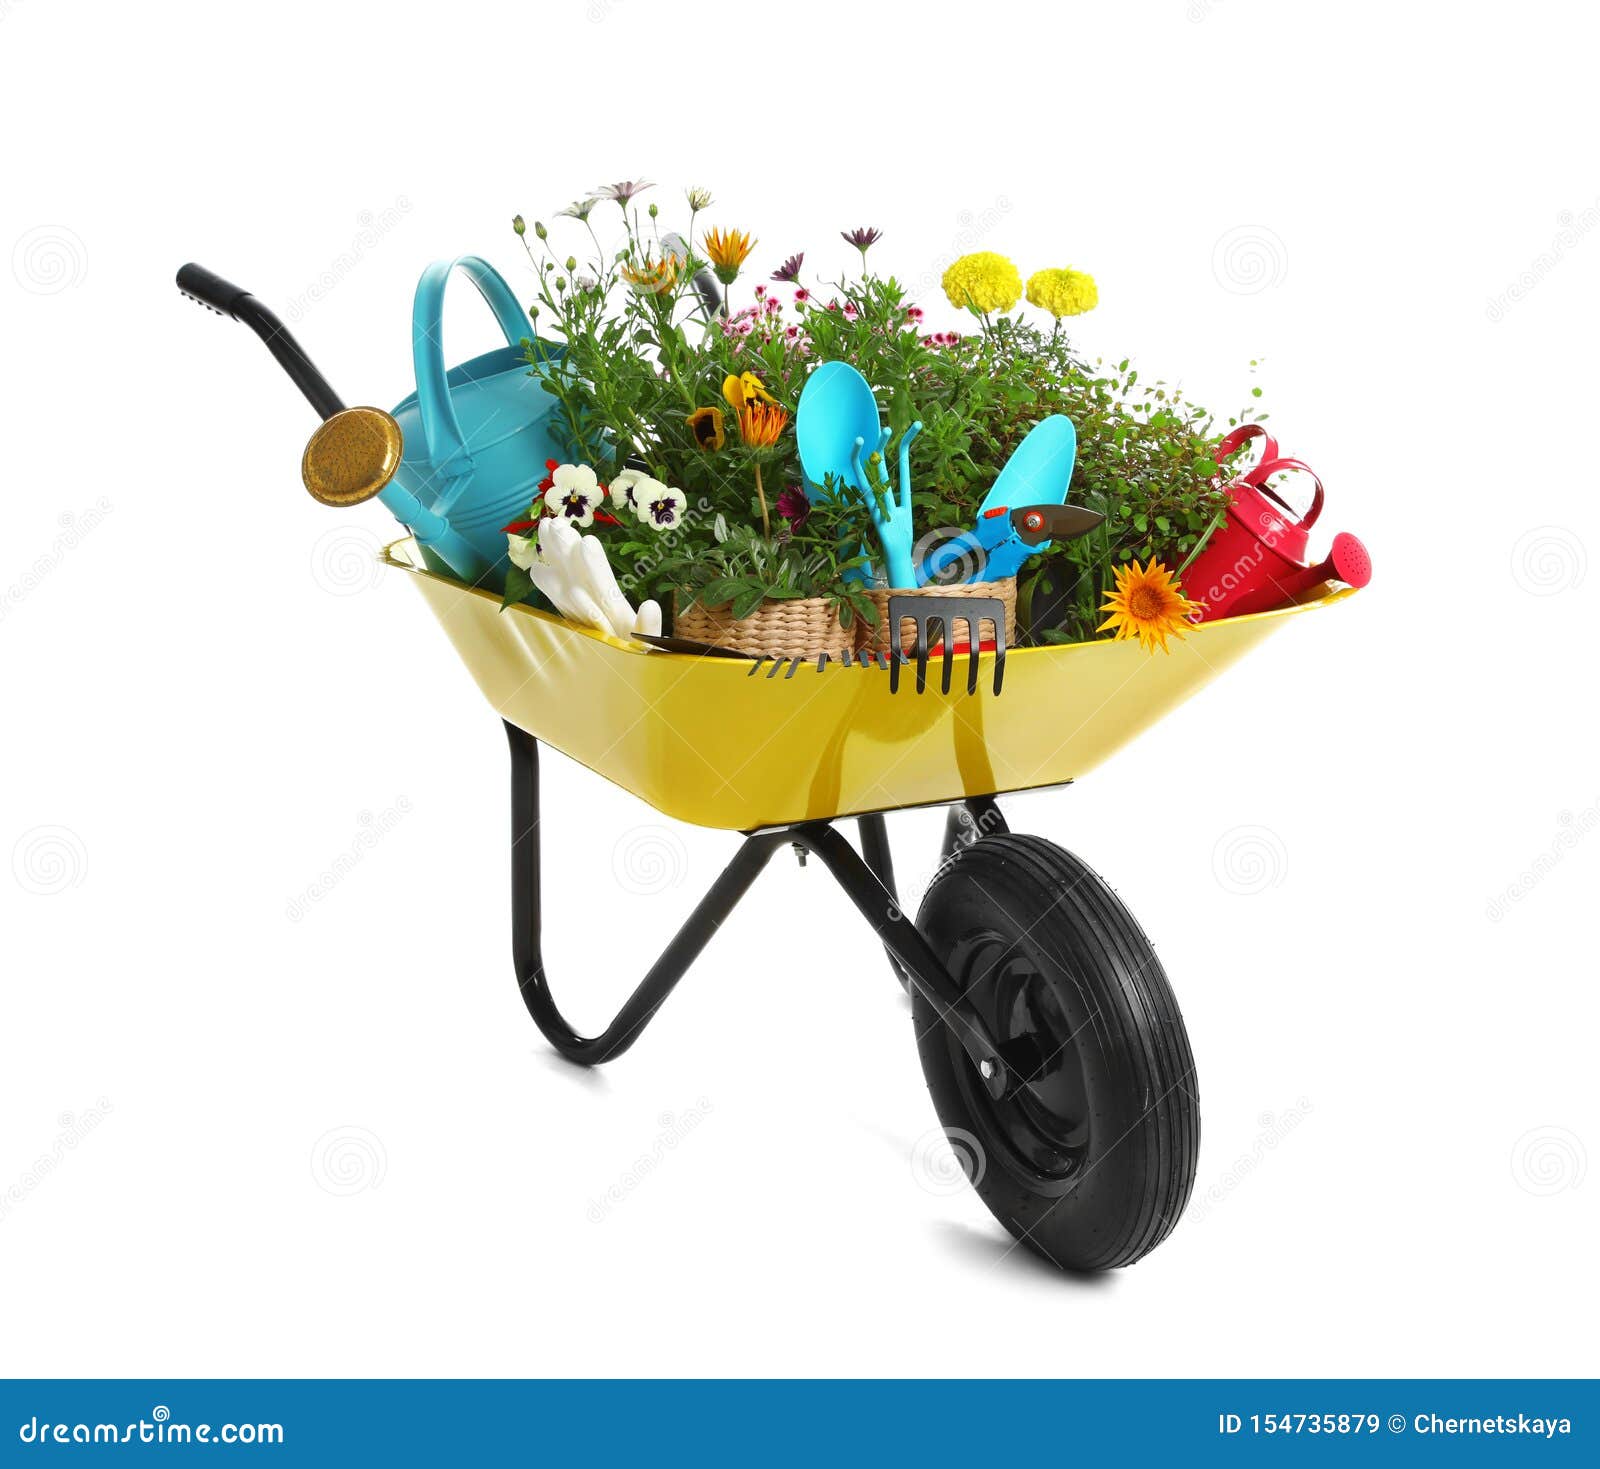 wheelbarrow with flowers and gardening tools  on